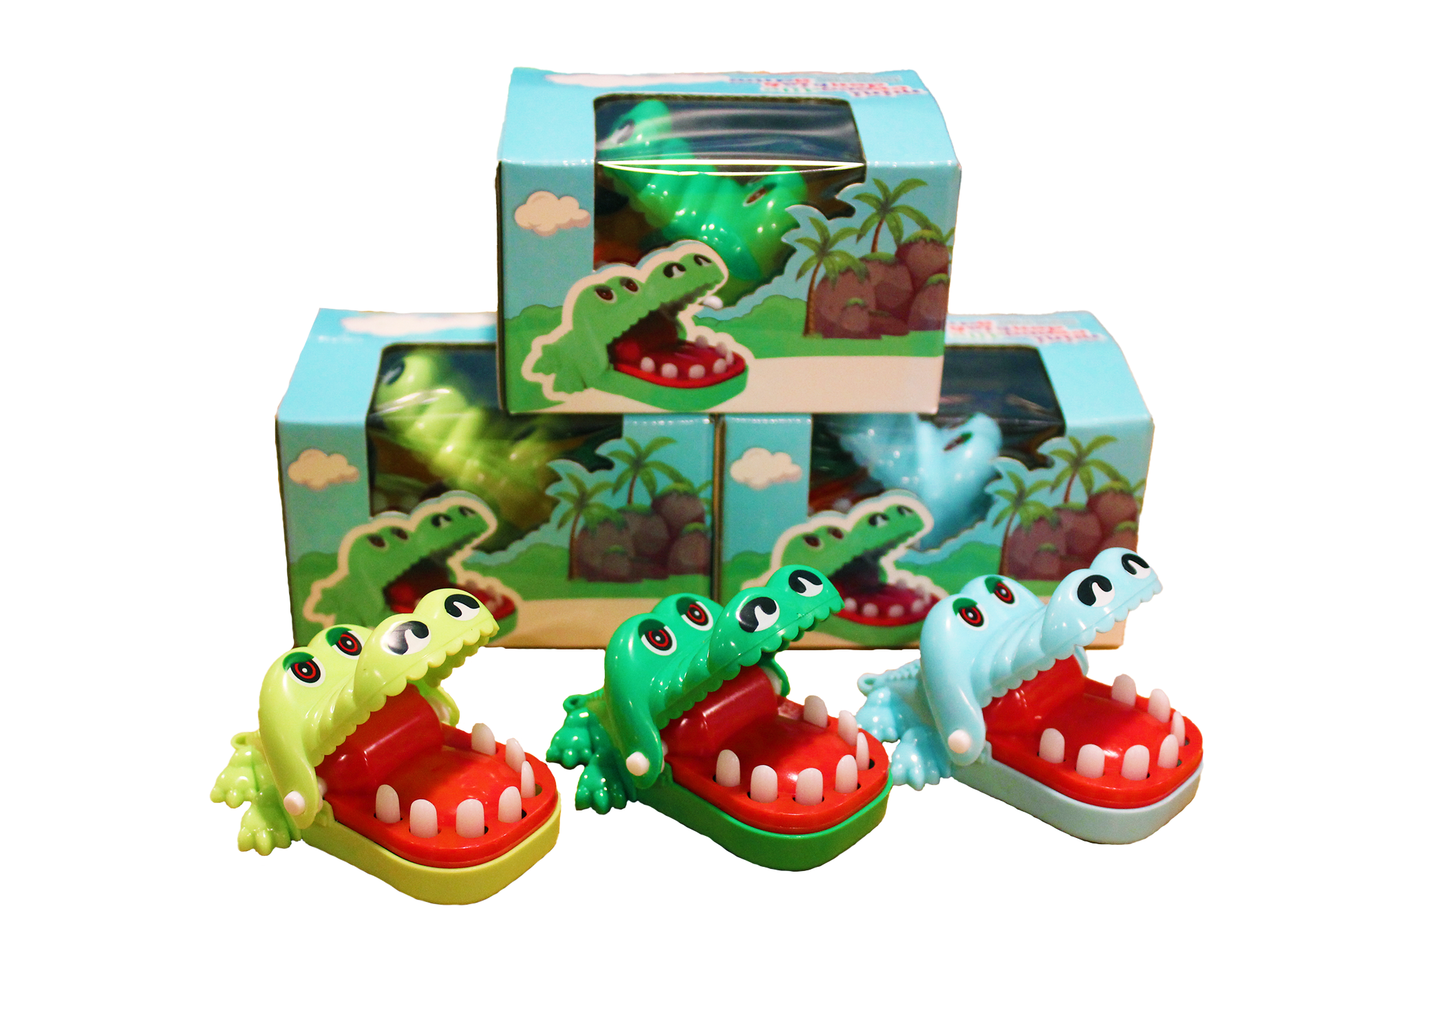 Mini Crocodile Finger Biting Game